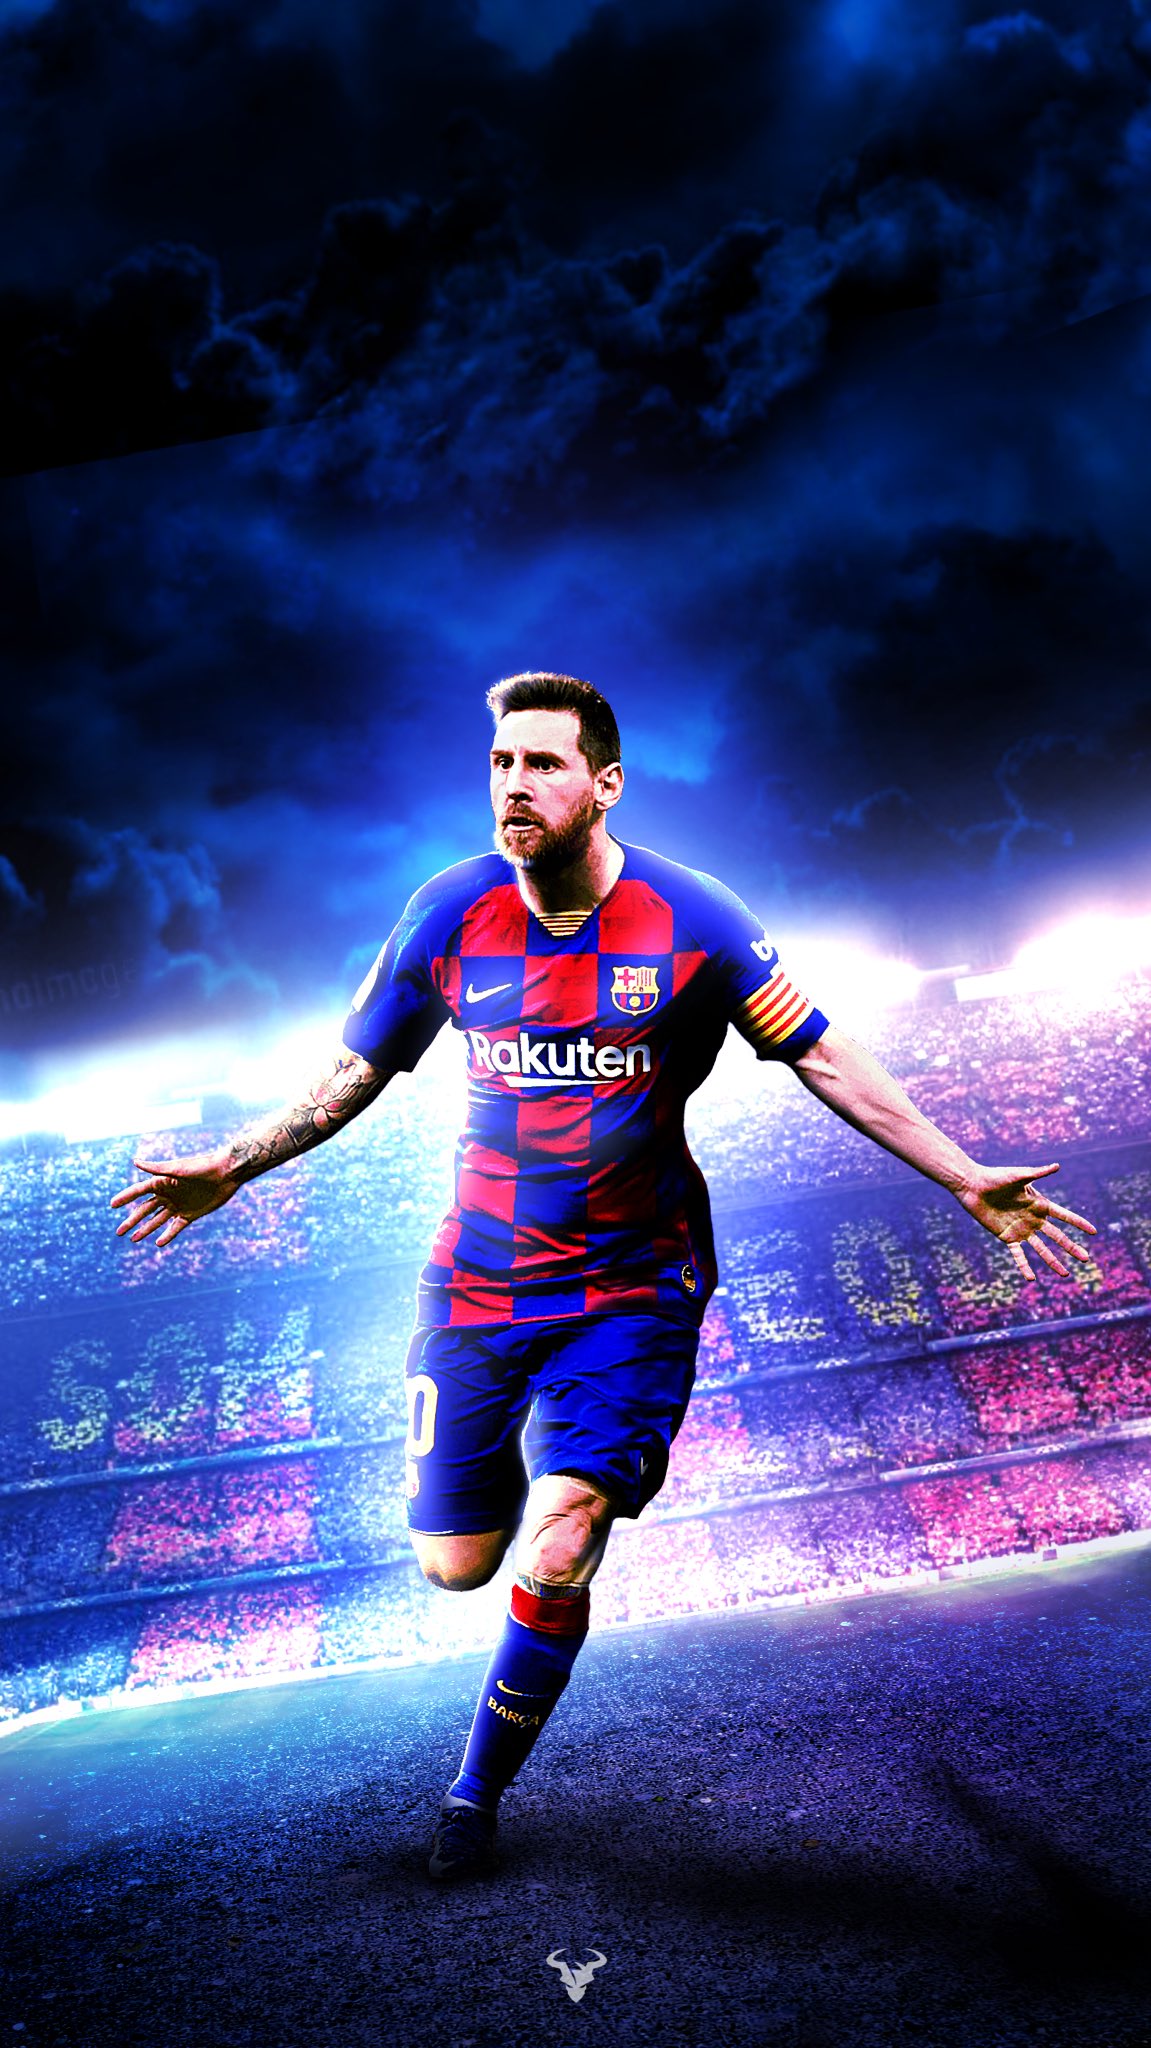 Kkking Lionel Messi リオネル メッシ Barcelona Rt いいね お願いします Lionel Messi Leo Barcelona サッカー壁紙 T Co Wvclvcdd1s Twitter